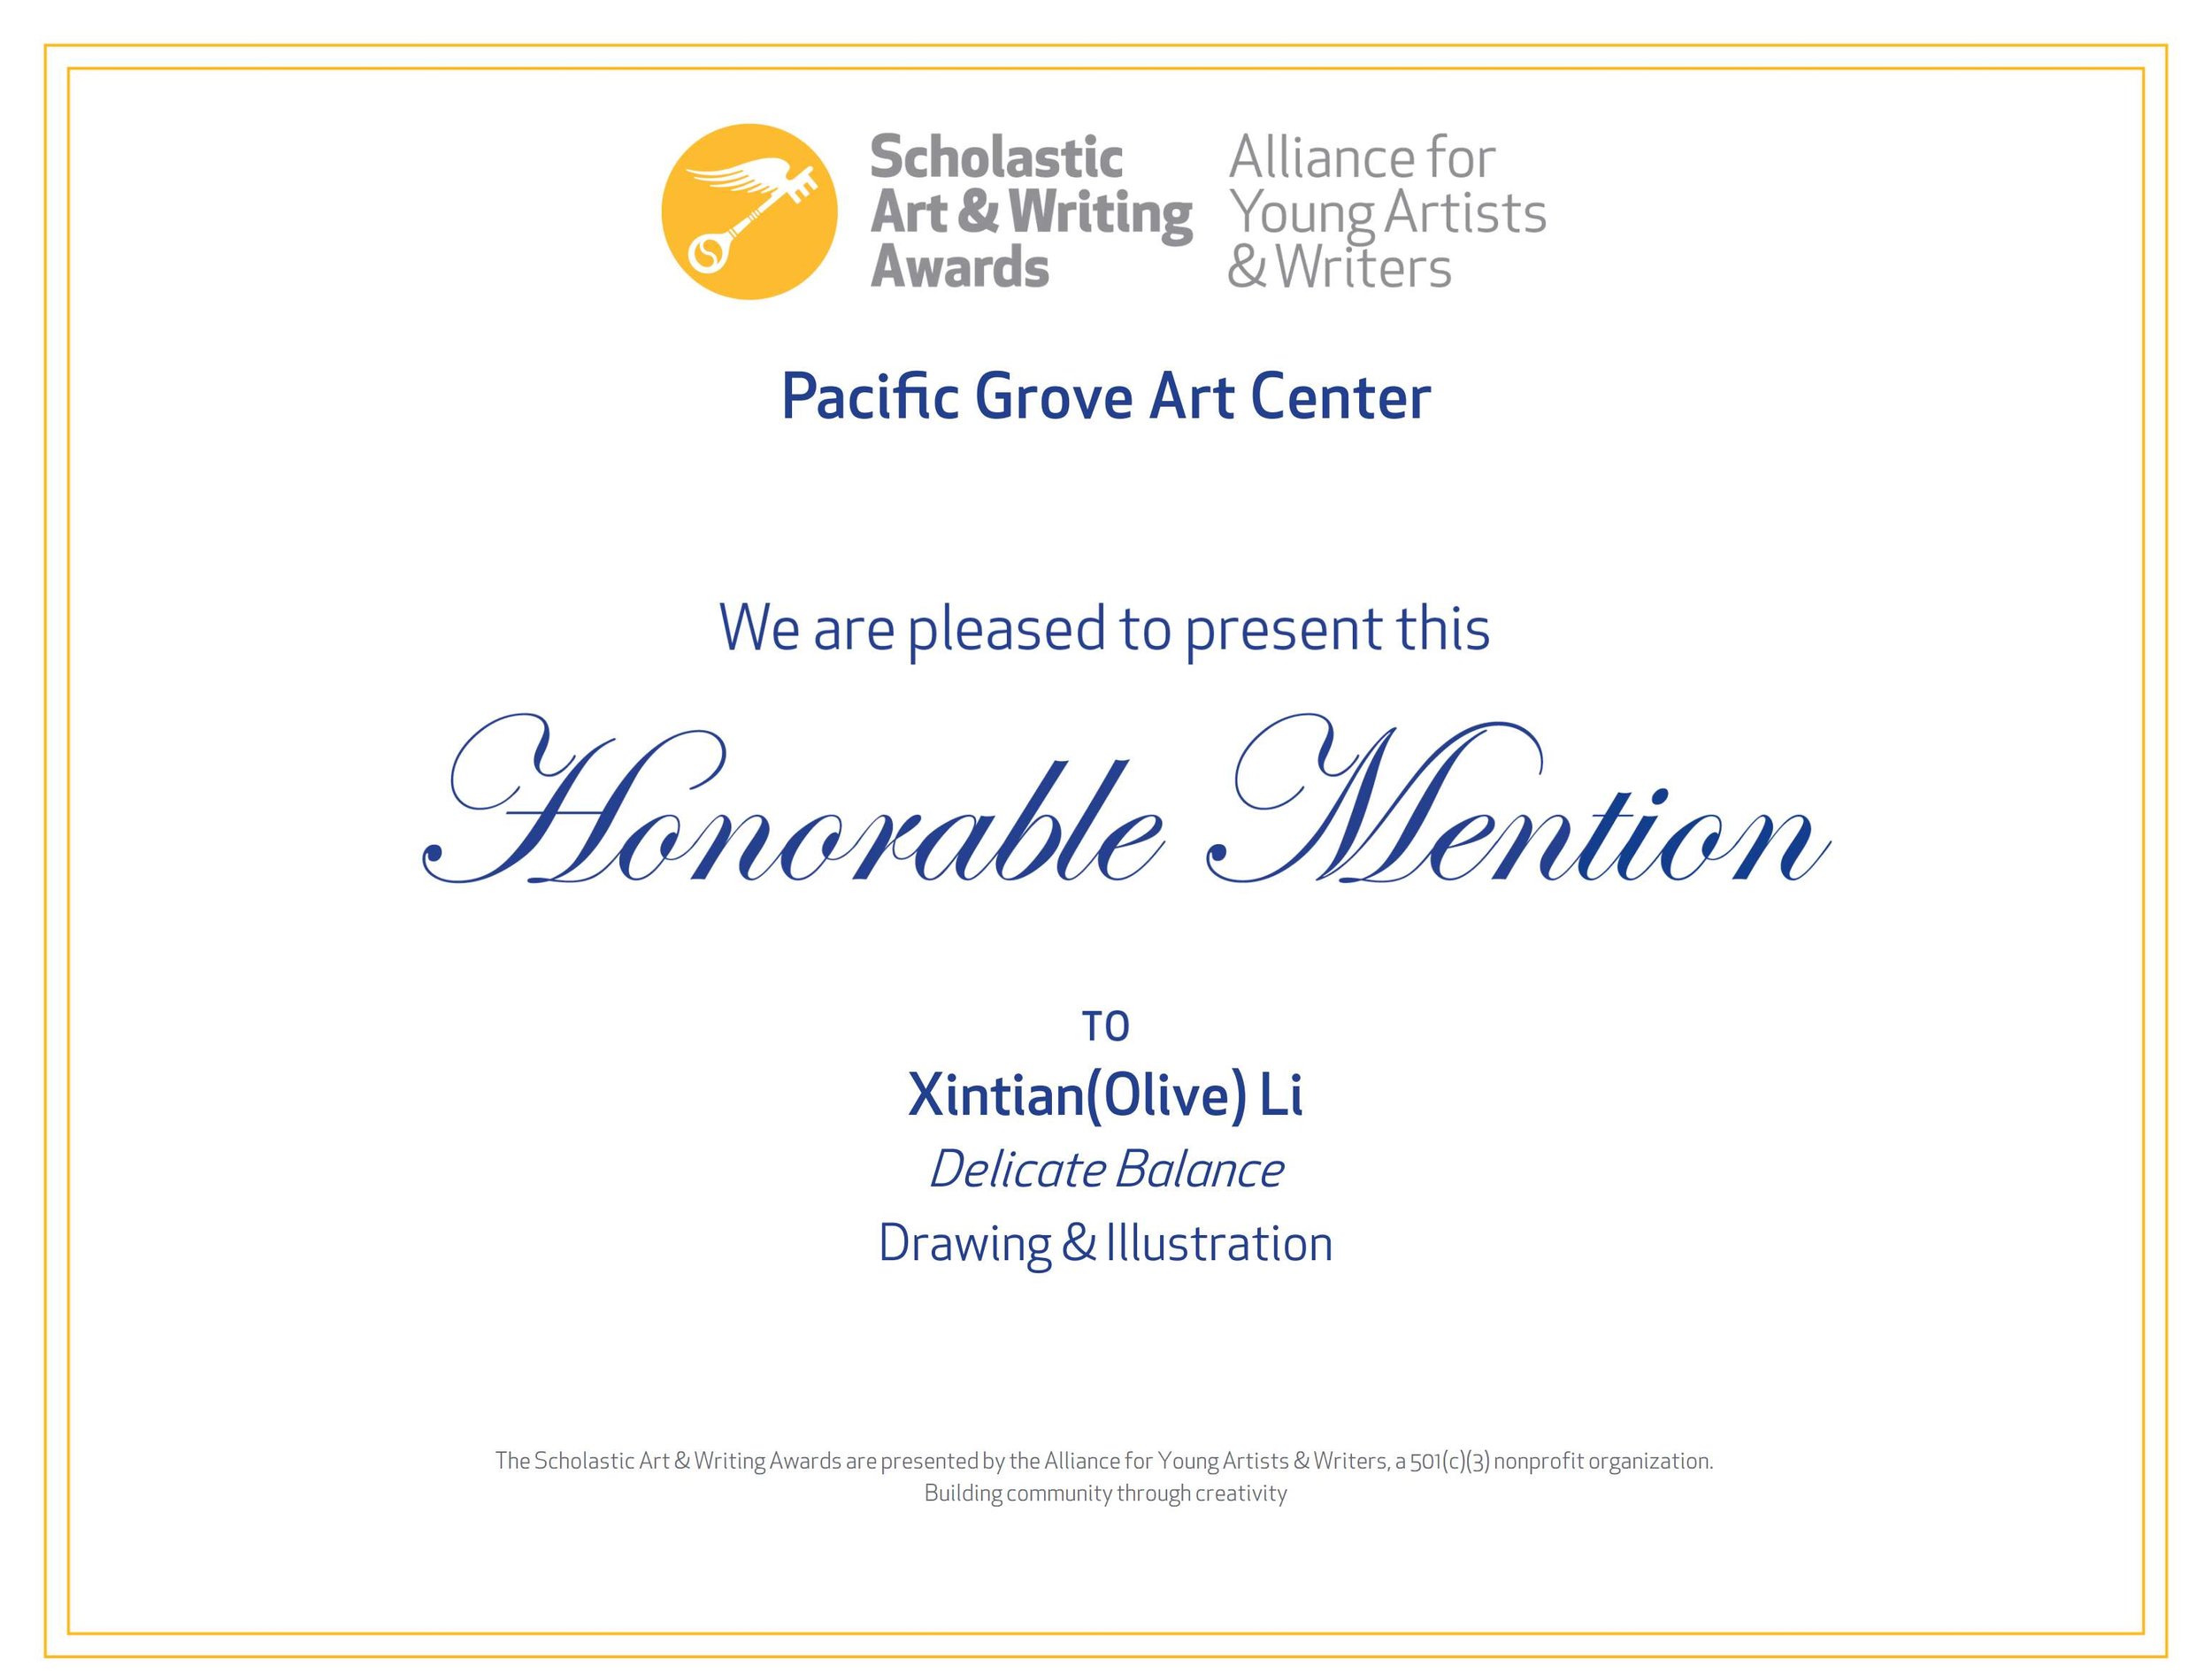 award_certificate_work_14195676_Honorable_Mention_Li_Xintian(Olive).jpeg